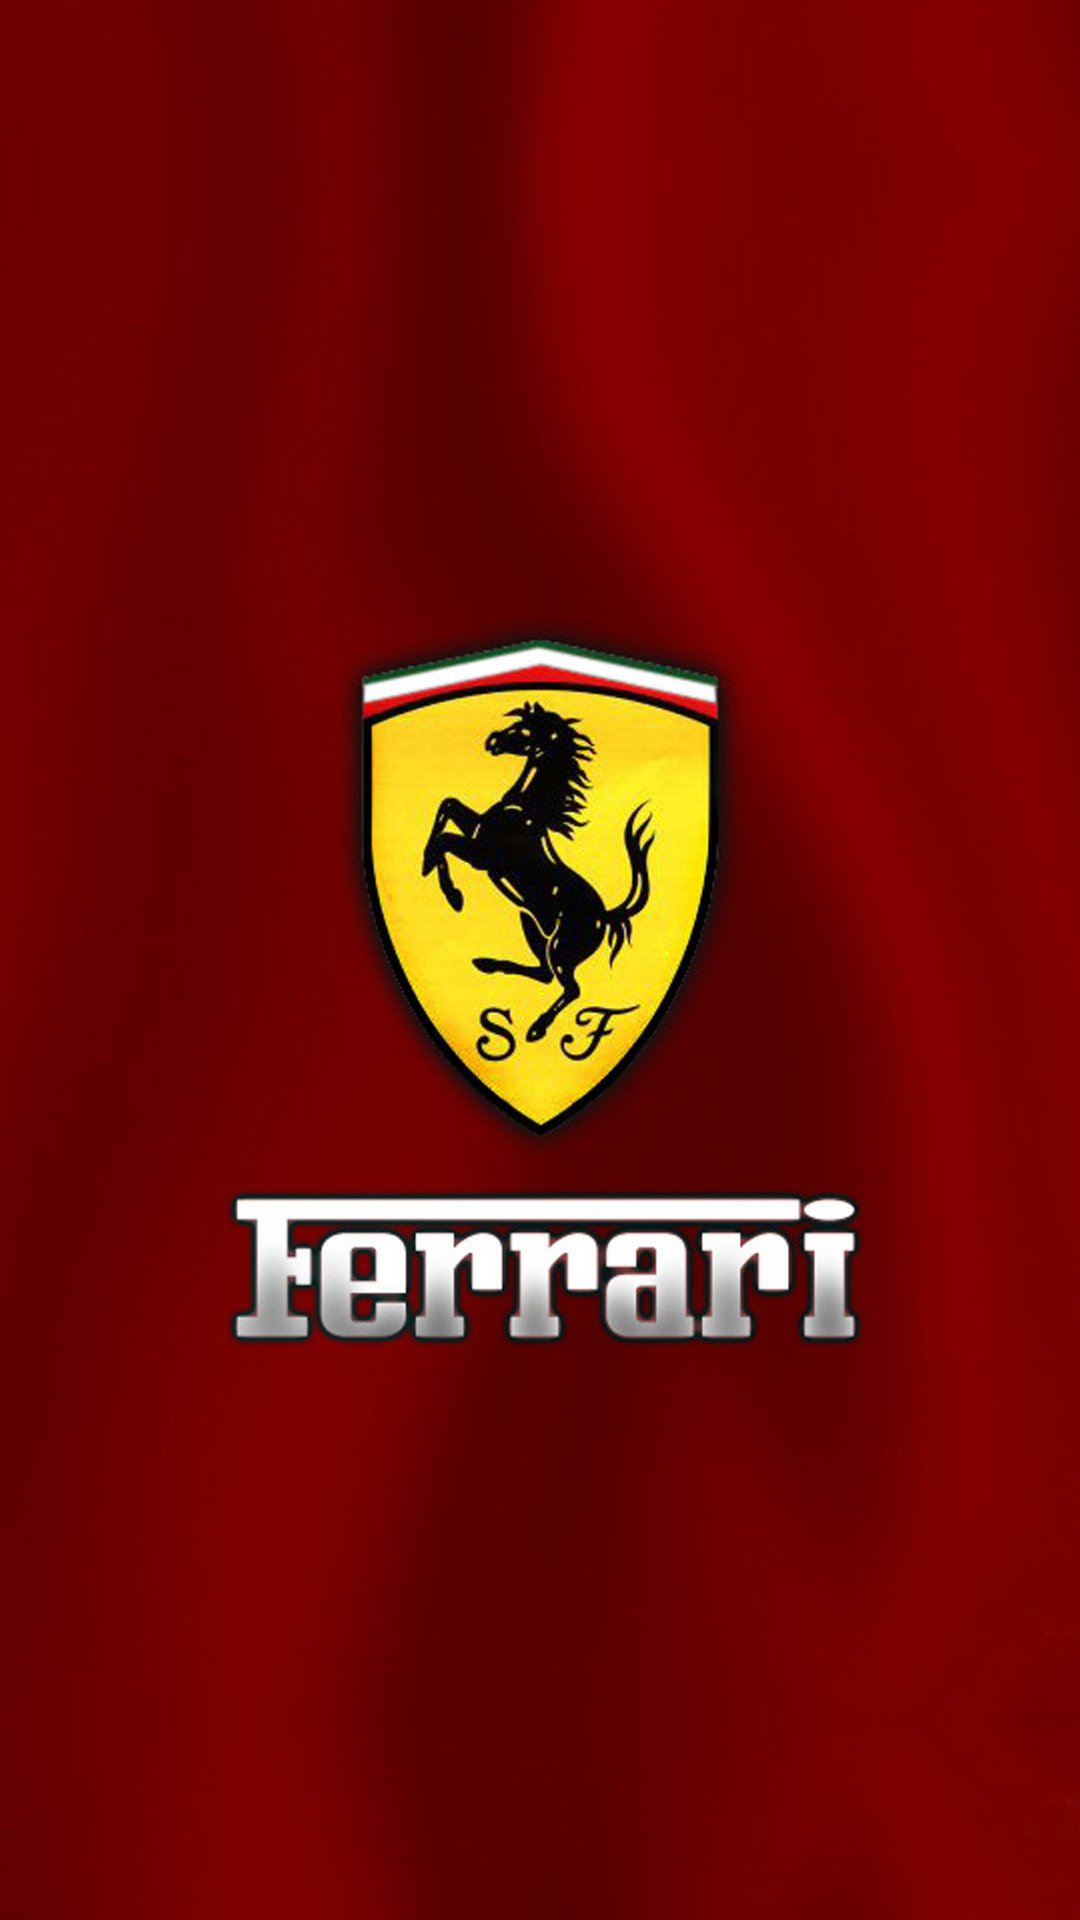 1080x1920 Explore Ferrari Logo, Fancy Cars, and more!